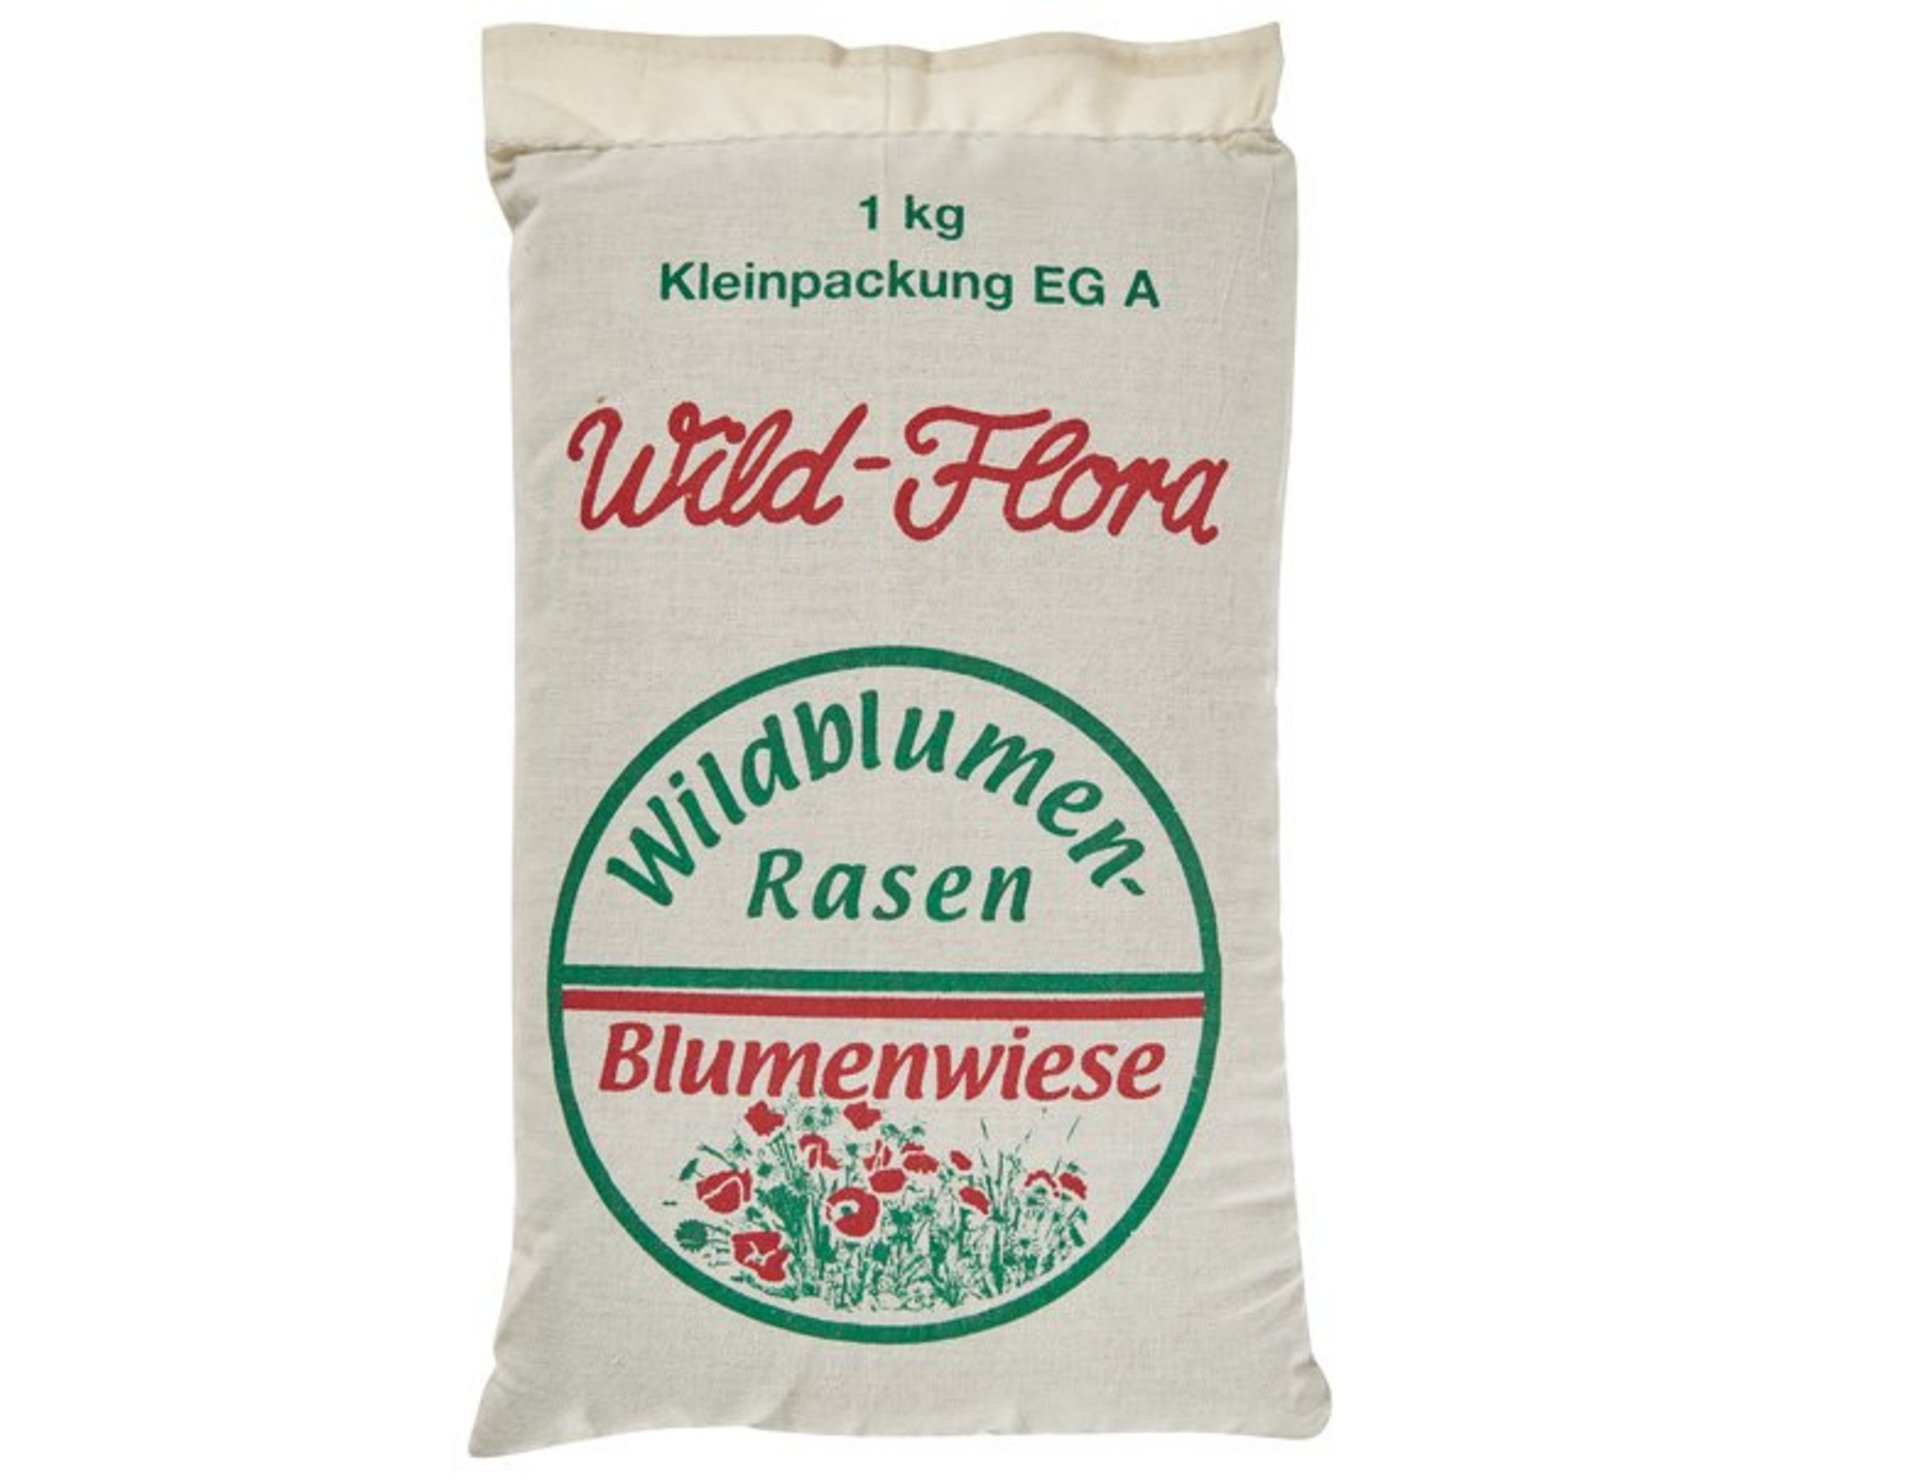 Rasetta Wildblumenrasen 1 kg L. Stroetmann Saat